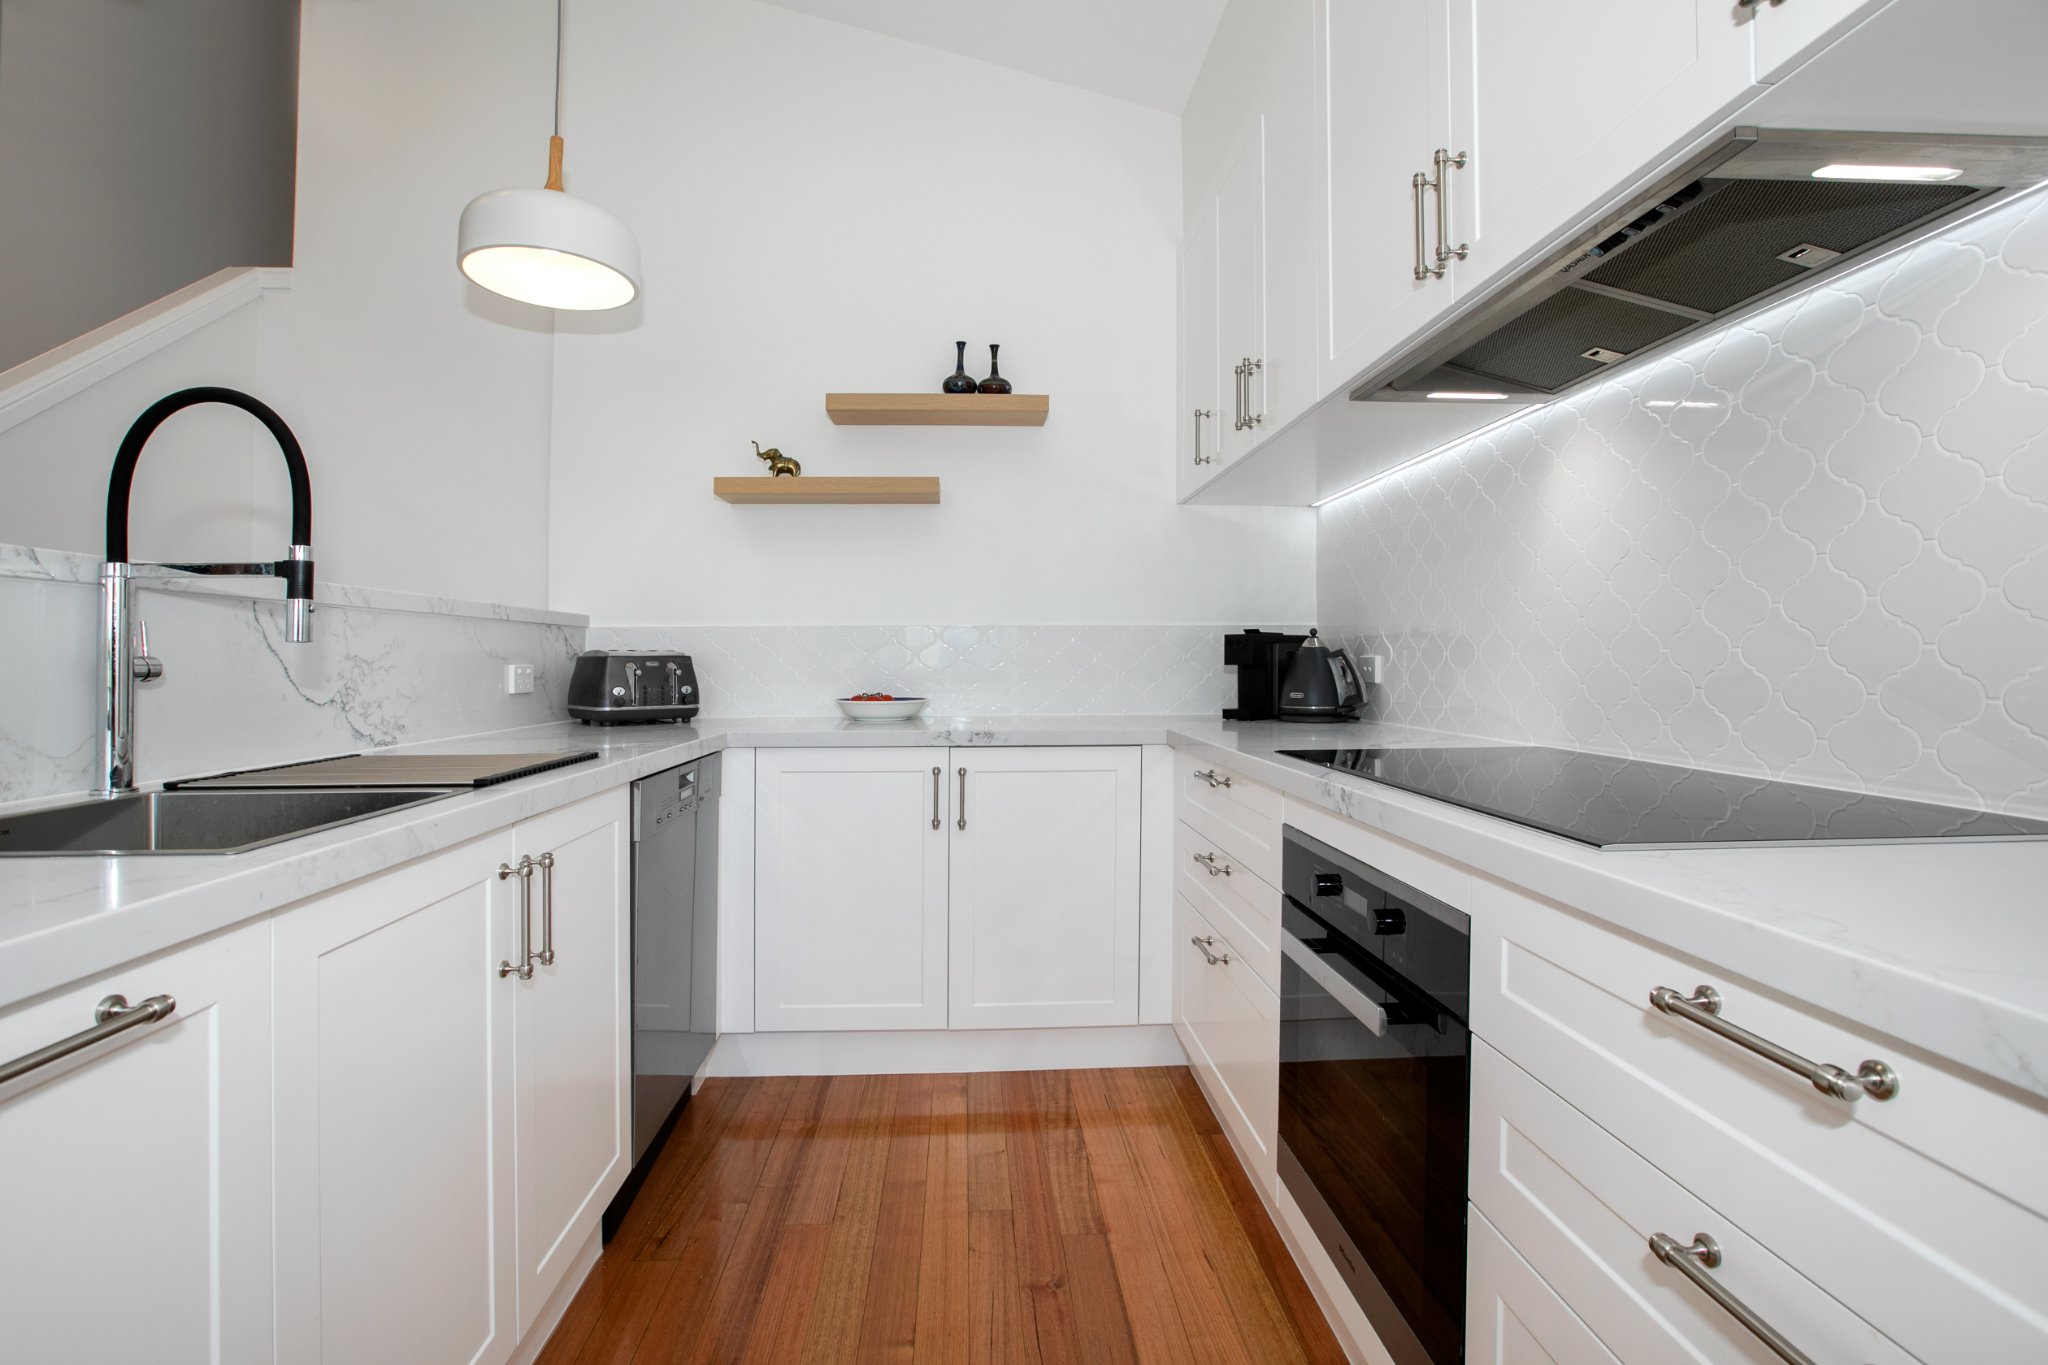 Routed Kitchen Cabinet Doors in kitchen renovation by Modern Kitchens Northside Brisbane